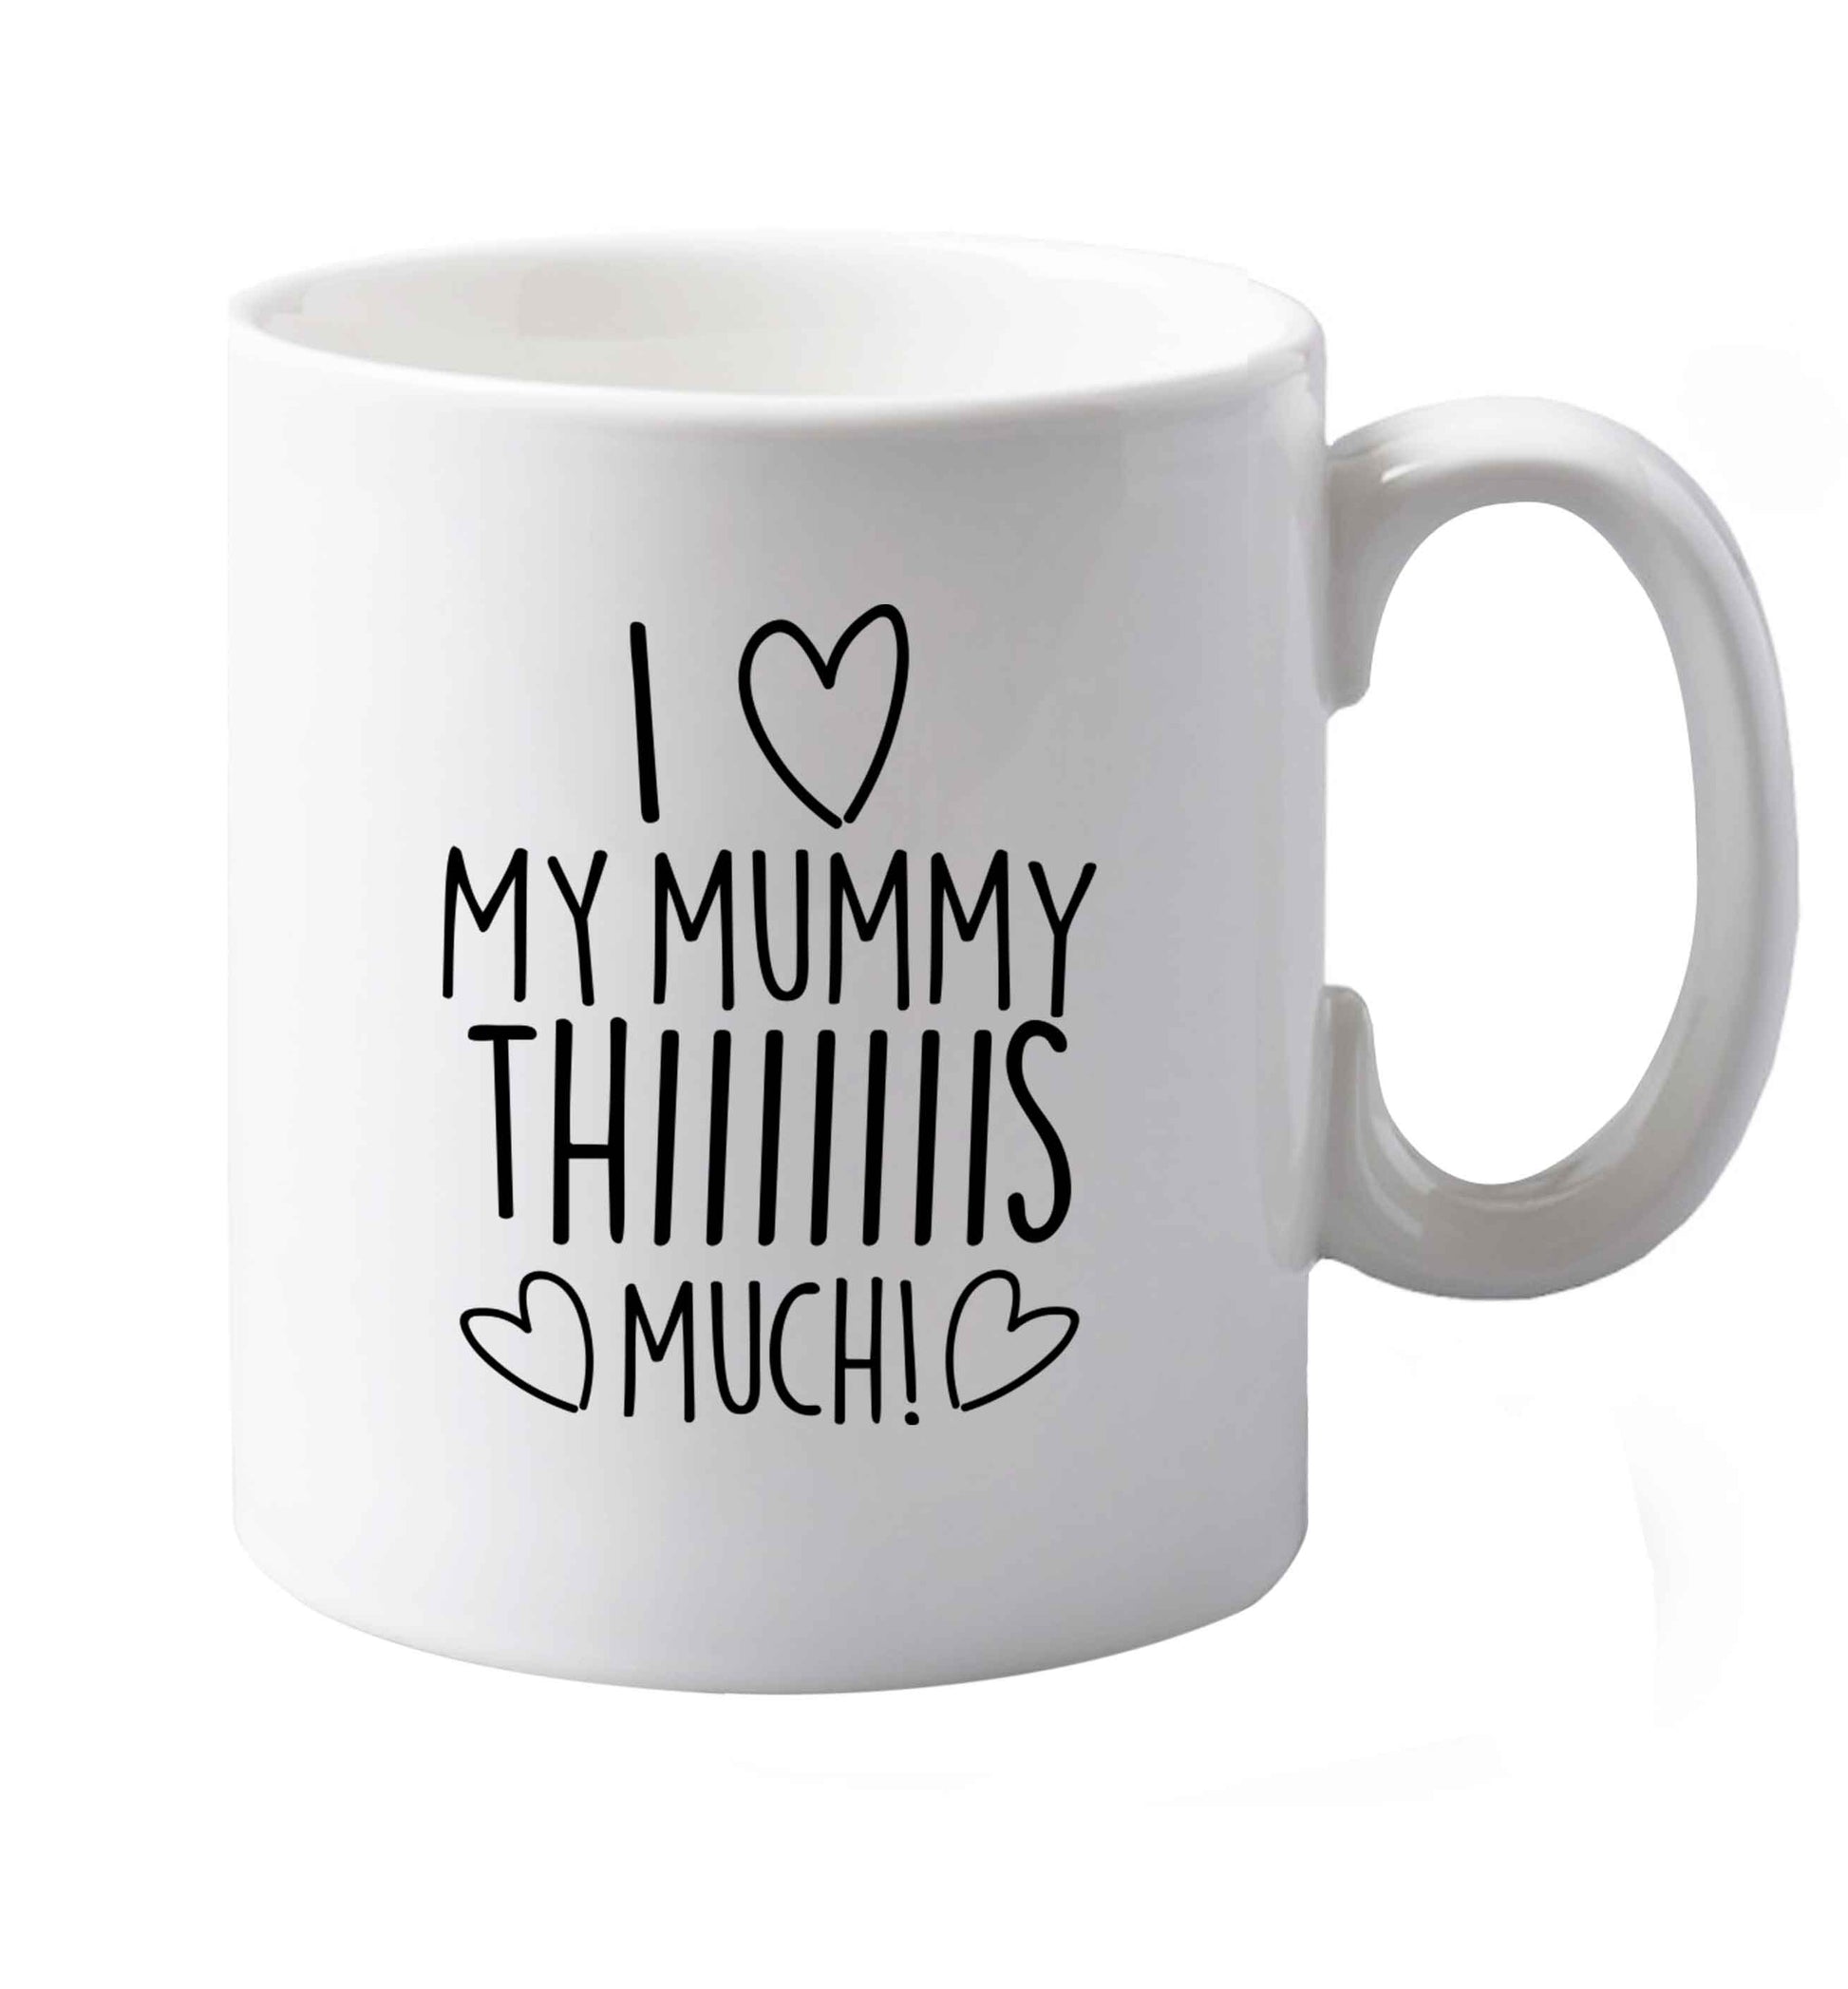 10 oz I love my mummy thiiiiis much! ceramic mug both sides